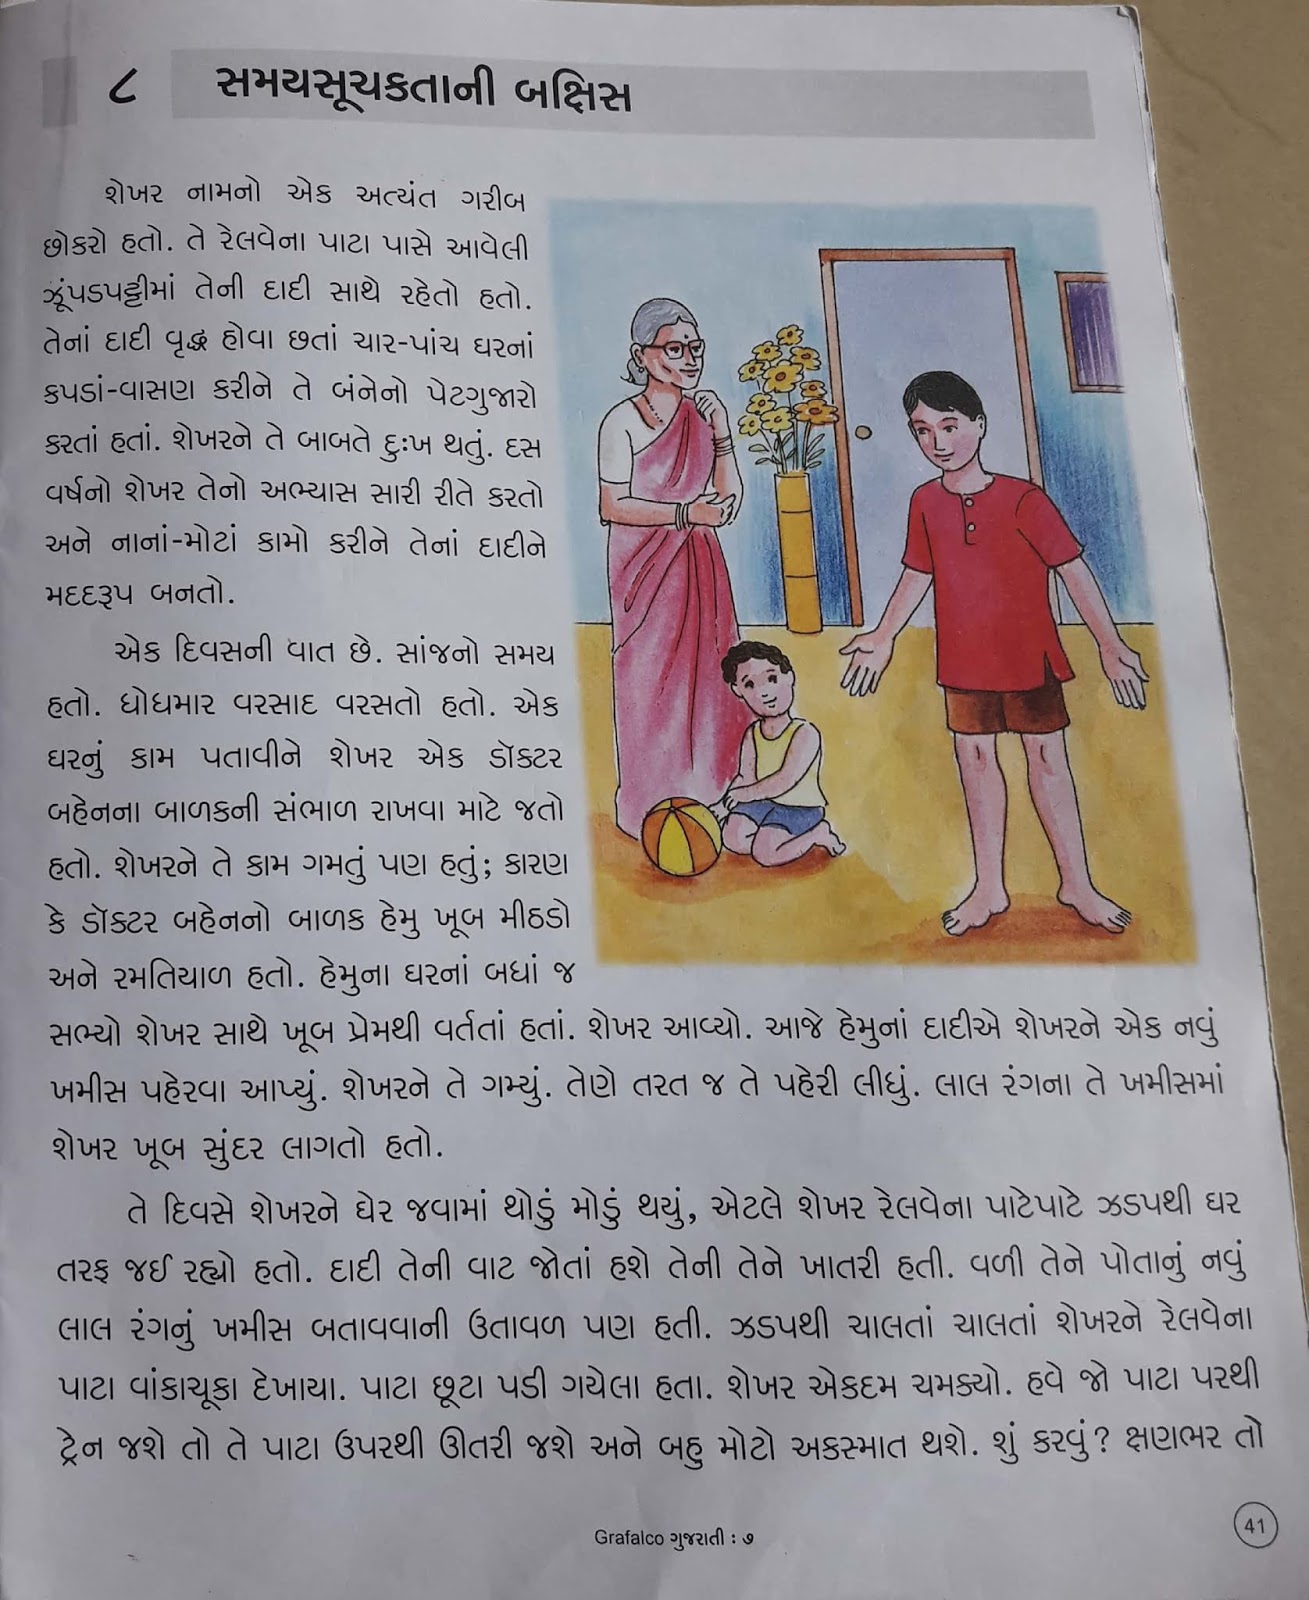 short book review in gujarati